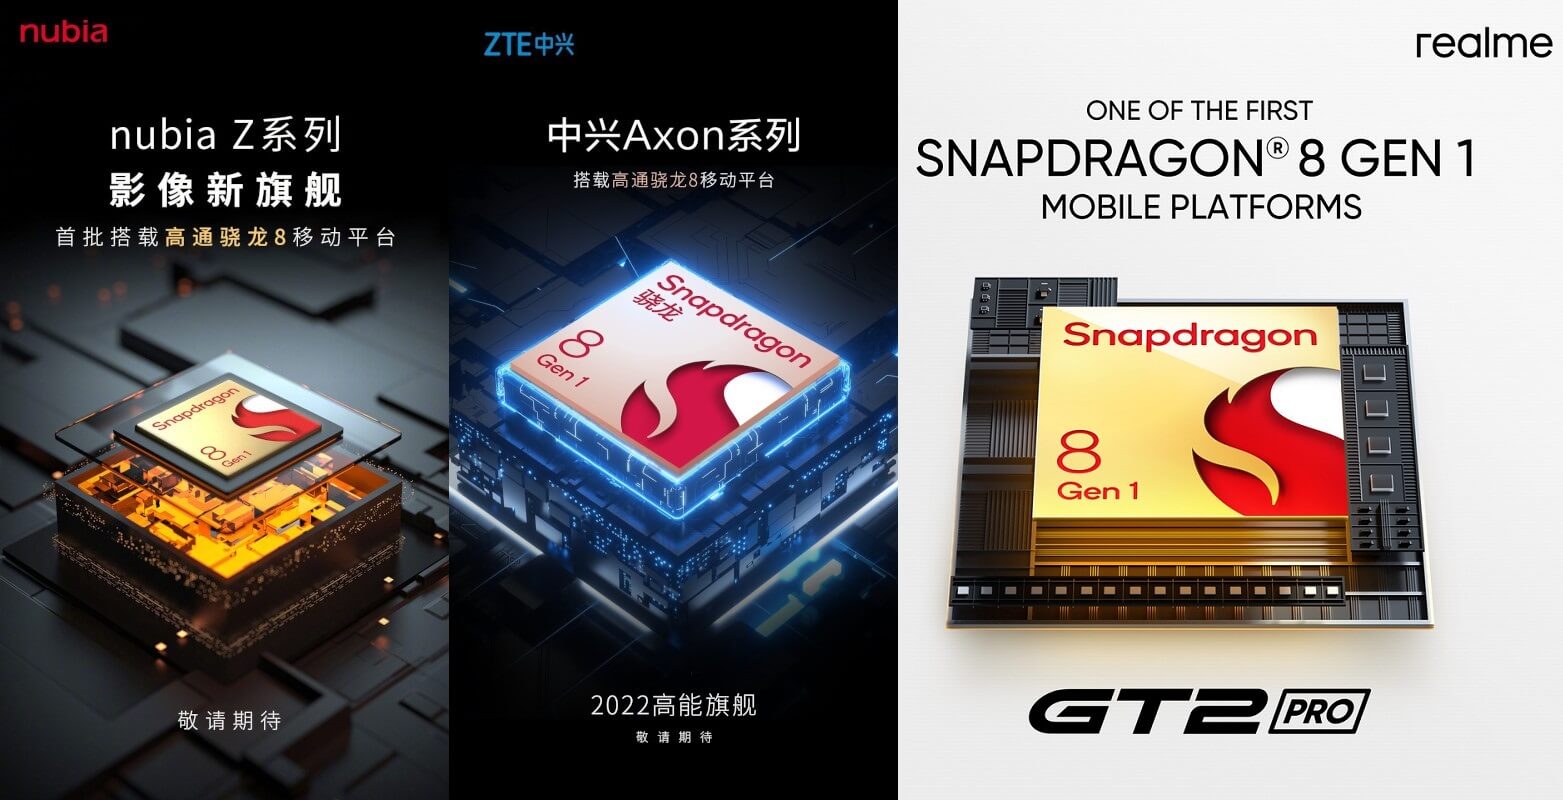 nubia Z series ZTE Axon Relme GT2 Pro Snapdragon 8 Gen 1.